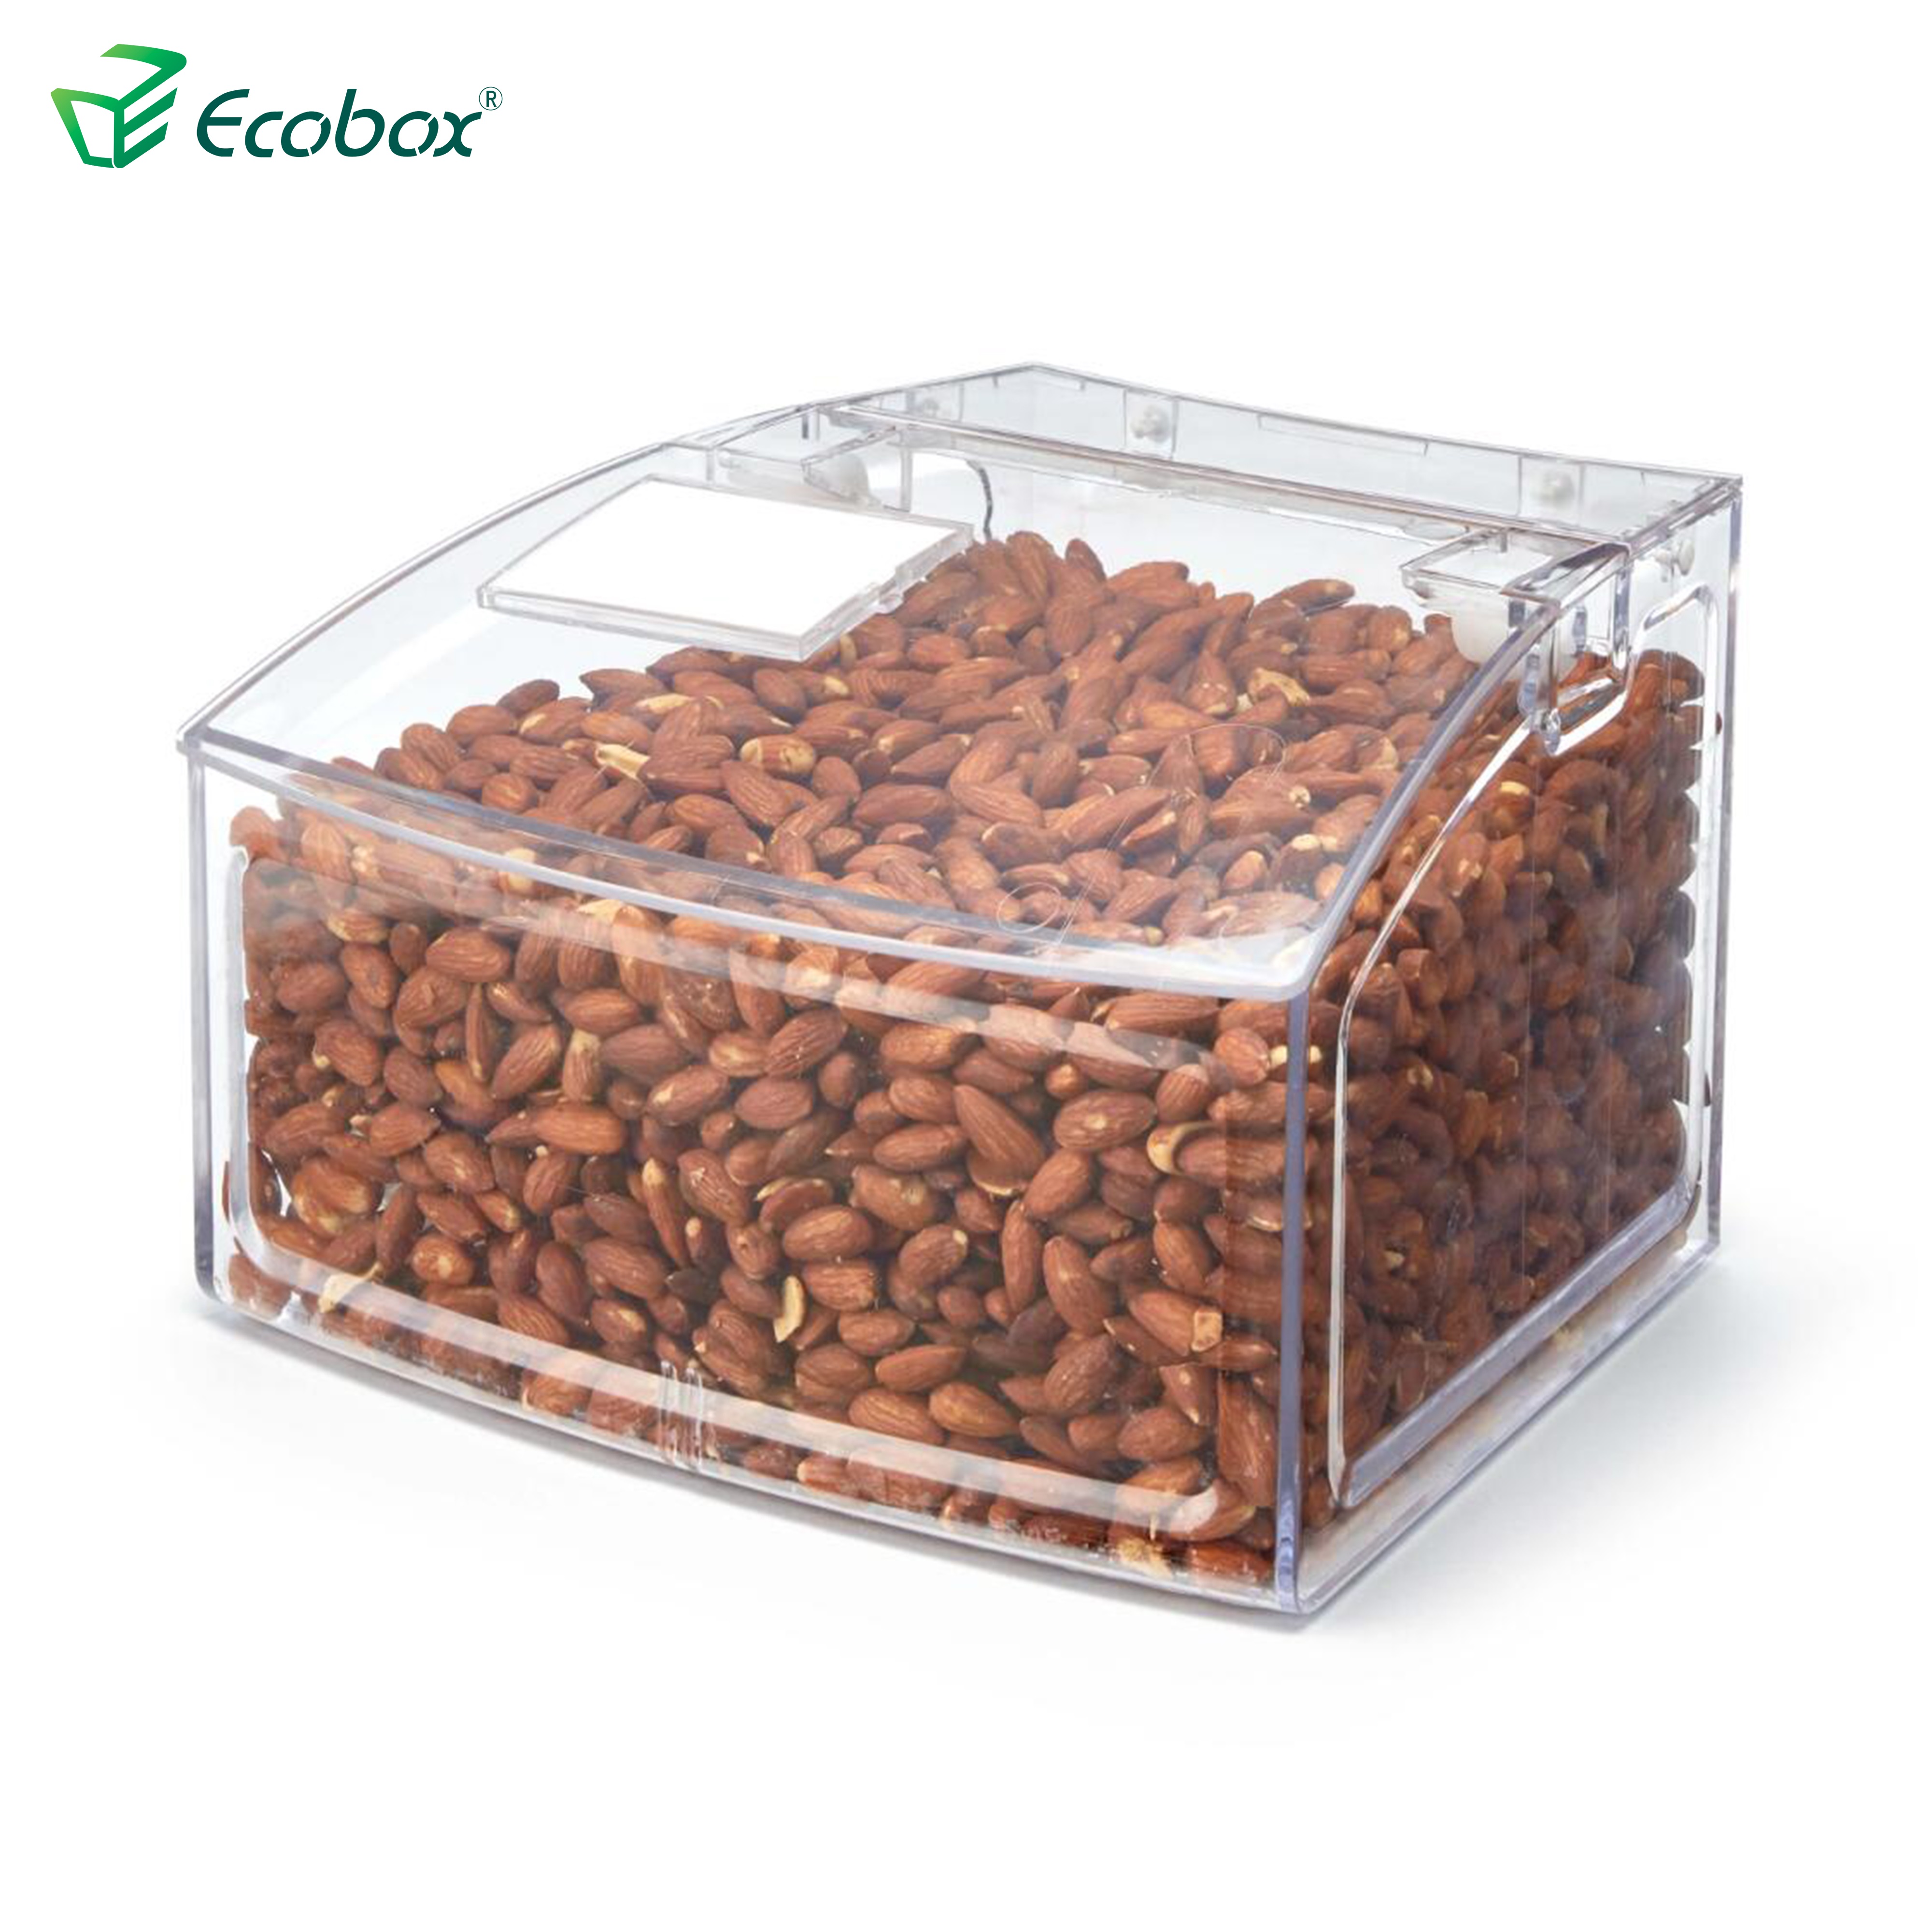 Ecobox SPH-009 Bogenförmiger Lebensmittelbehälter für die Lebensmittelindustrie in Supermärkten